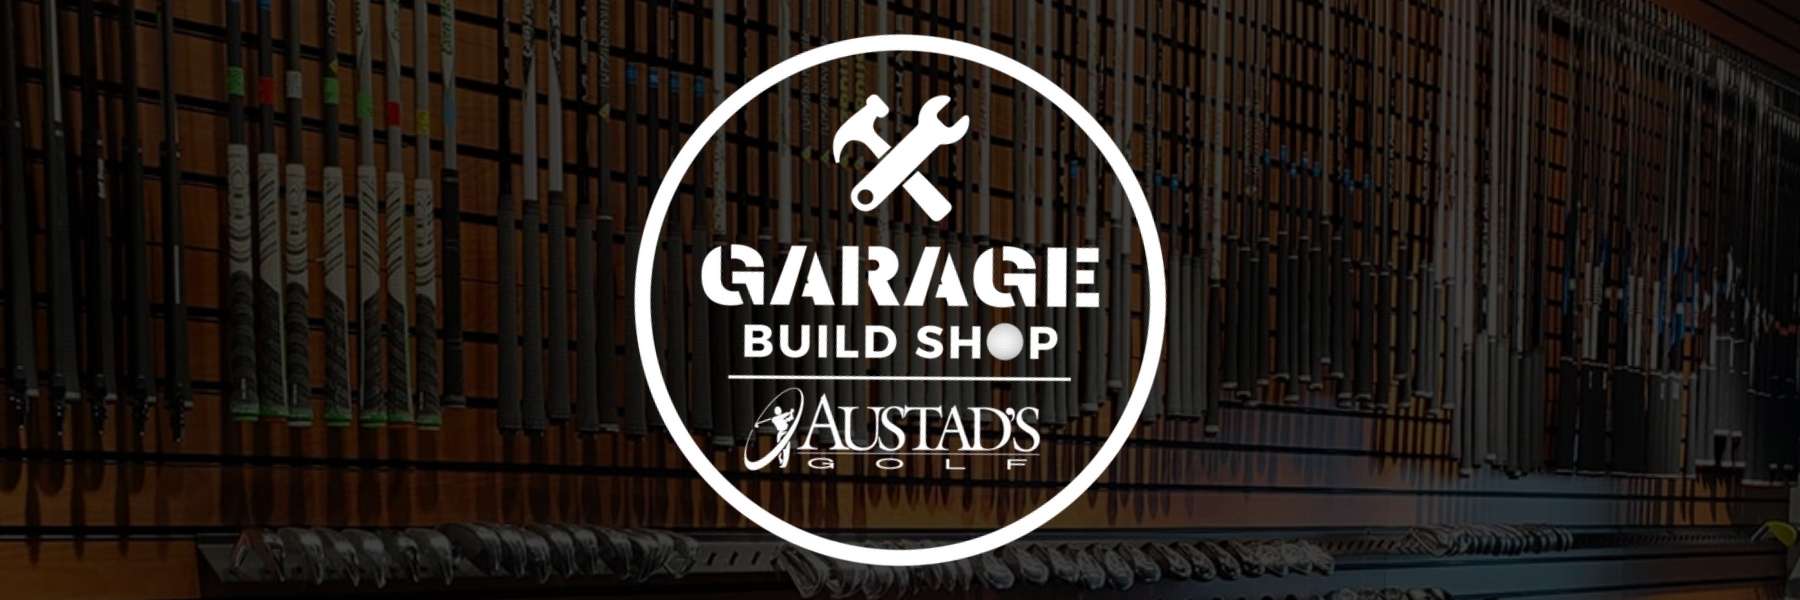 Garage Build Shop